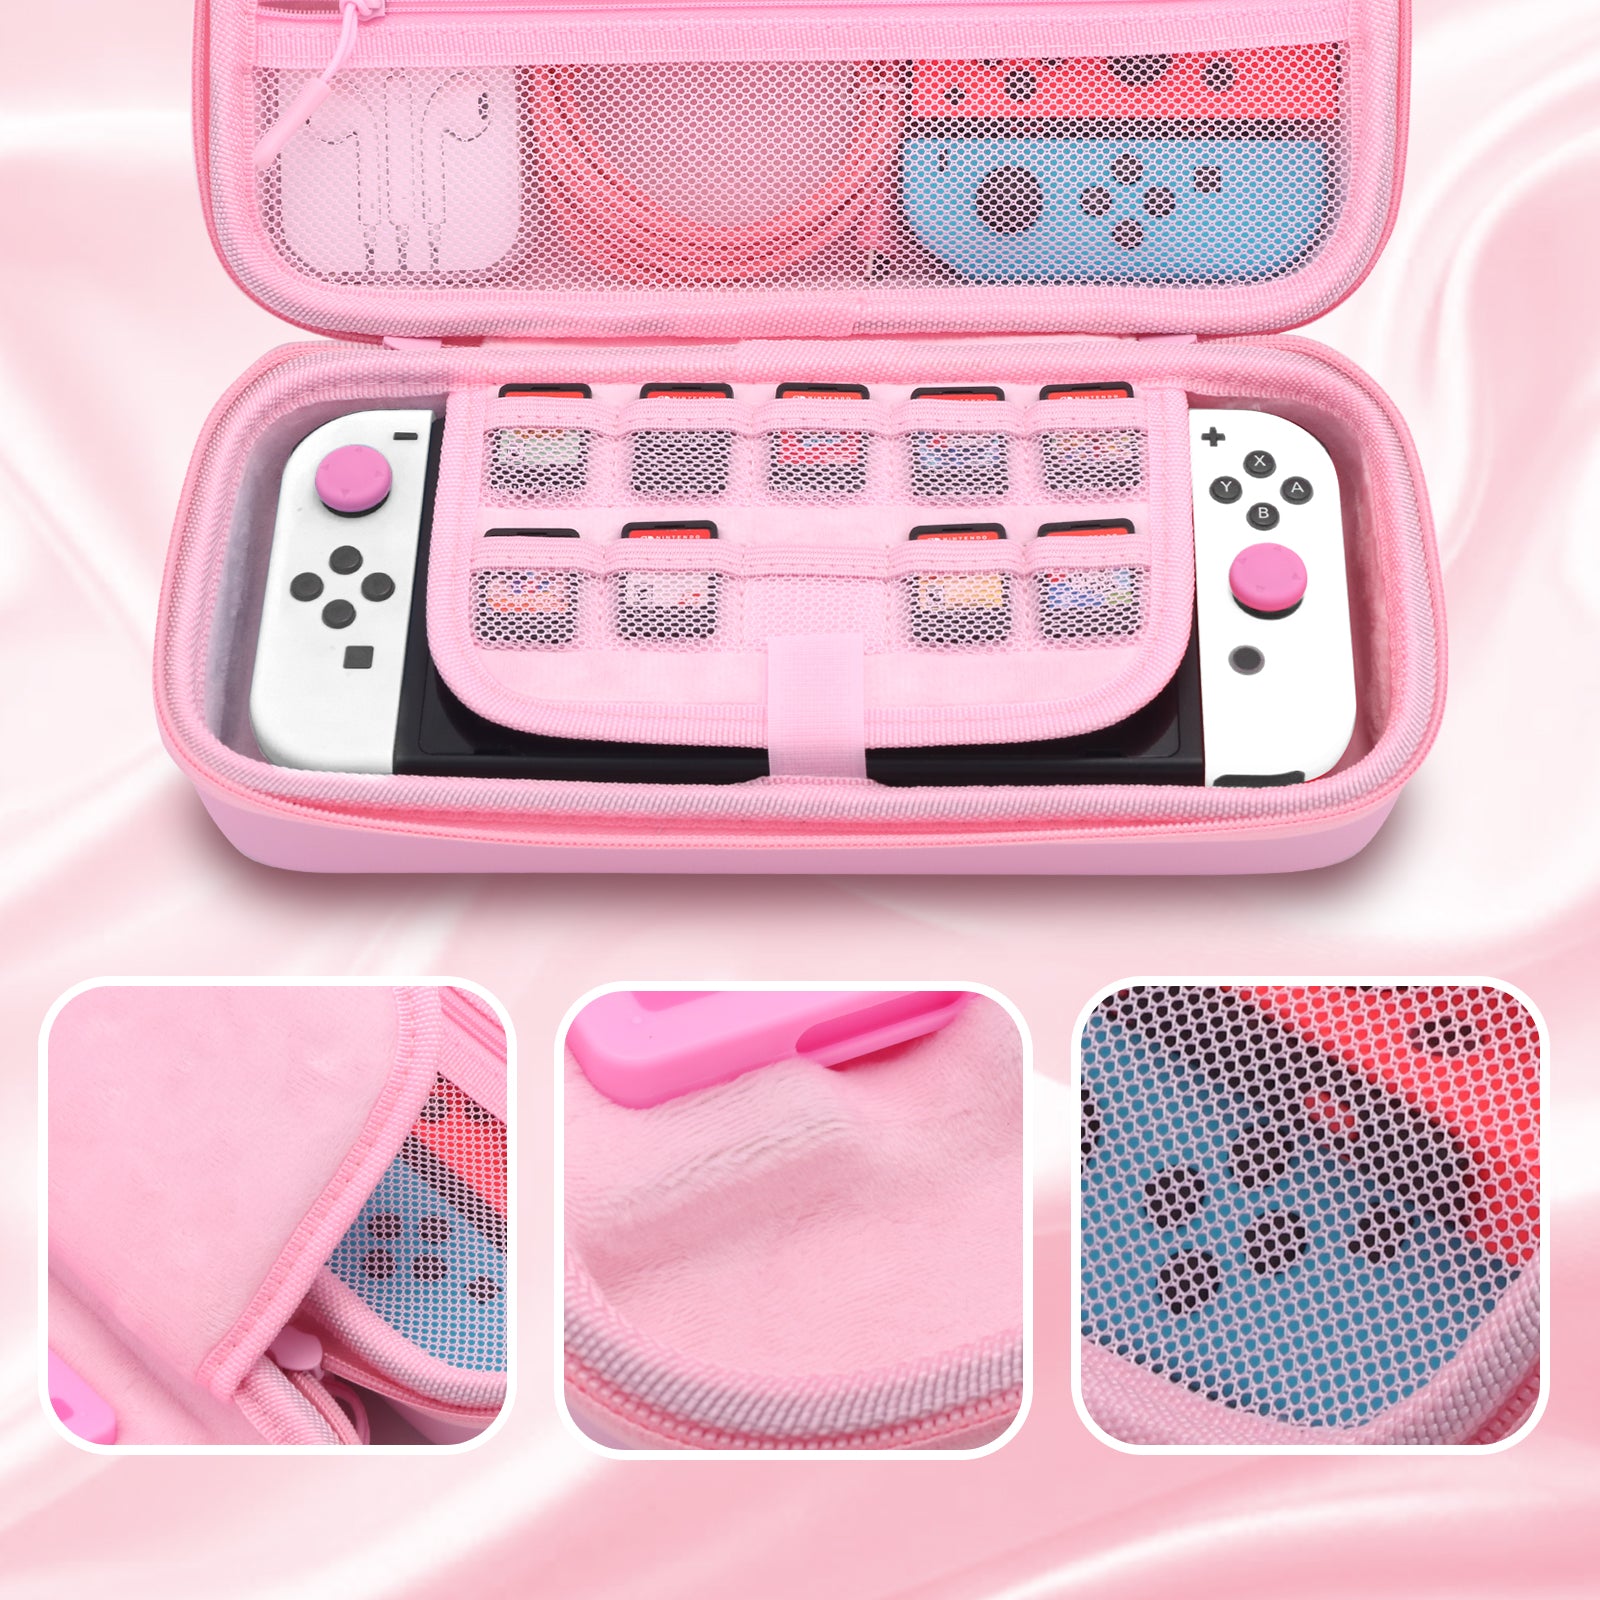 nintendo switch oled pink case